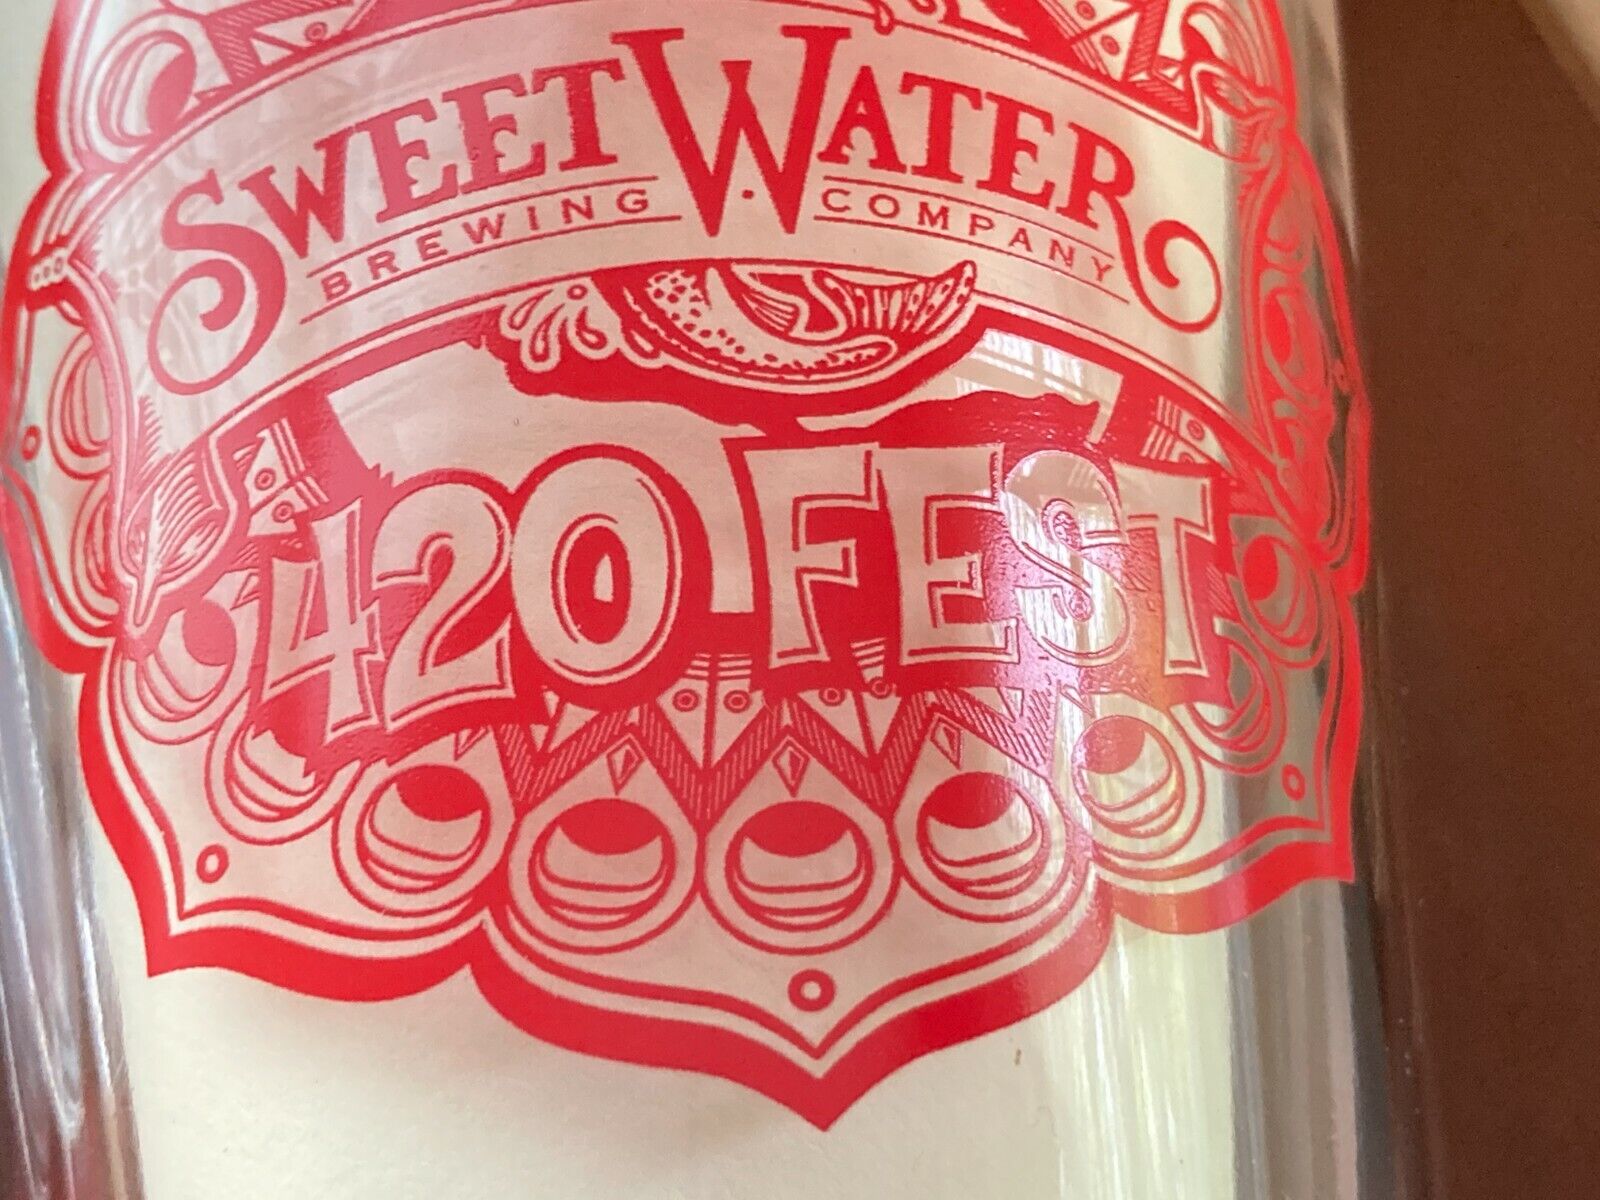 Sweet Water Brewing Company 420 Fest Pint Glasses Set Lot of 9 Red Graphics Sweet Water Brewing Company - фотография #9